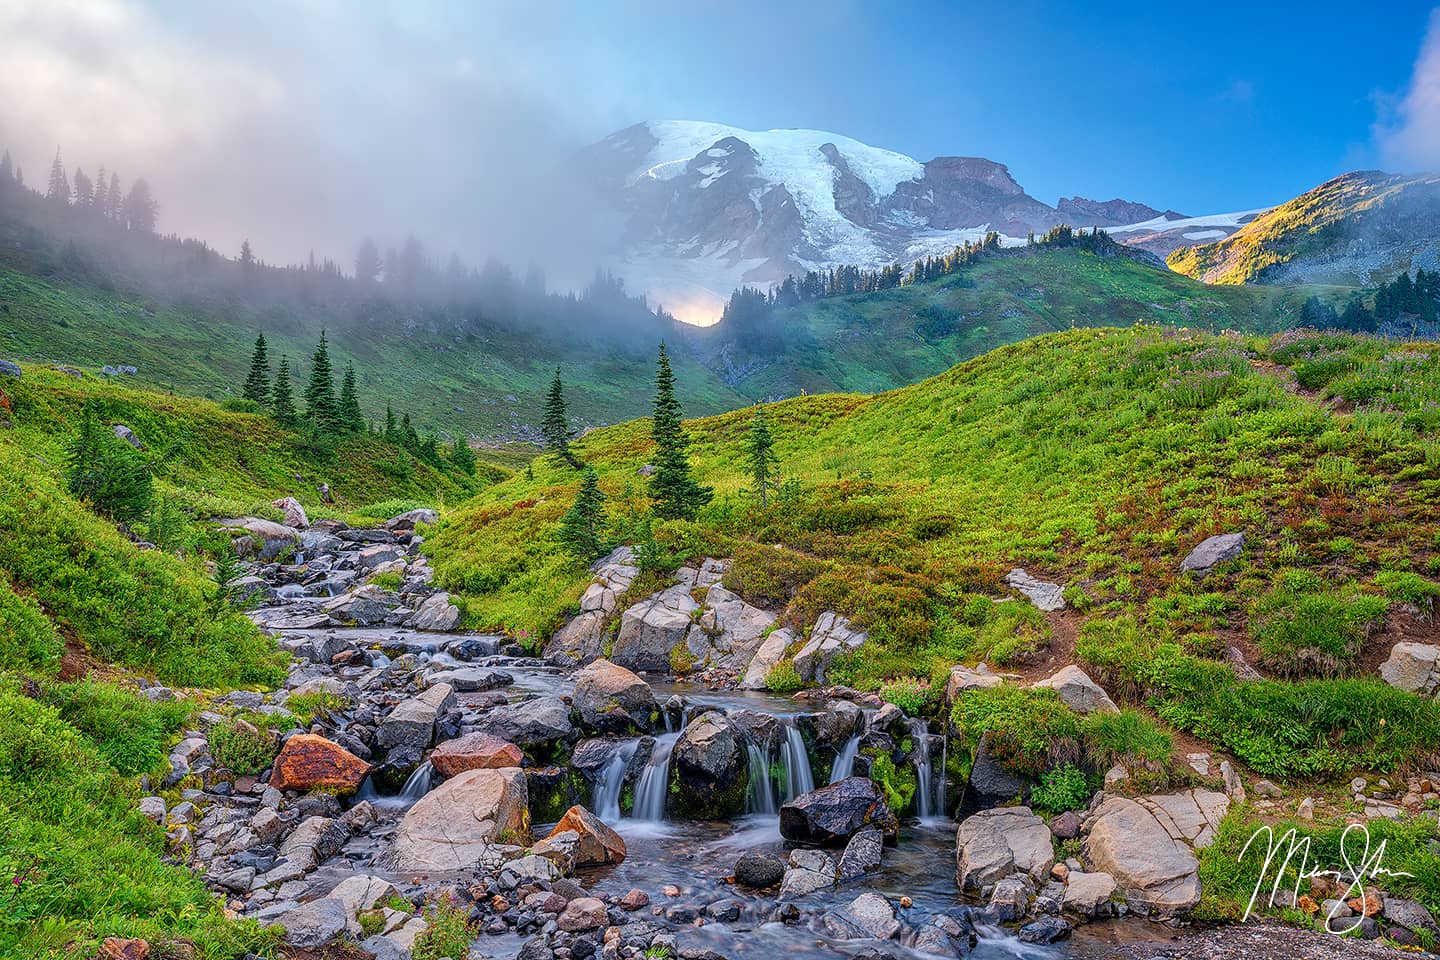 Dreaming of Rainier - Mount Rainier National Park, Washington